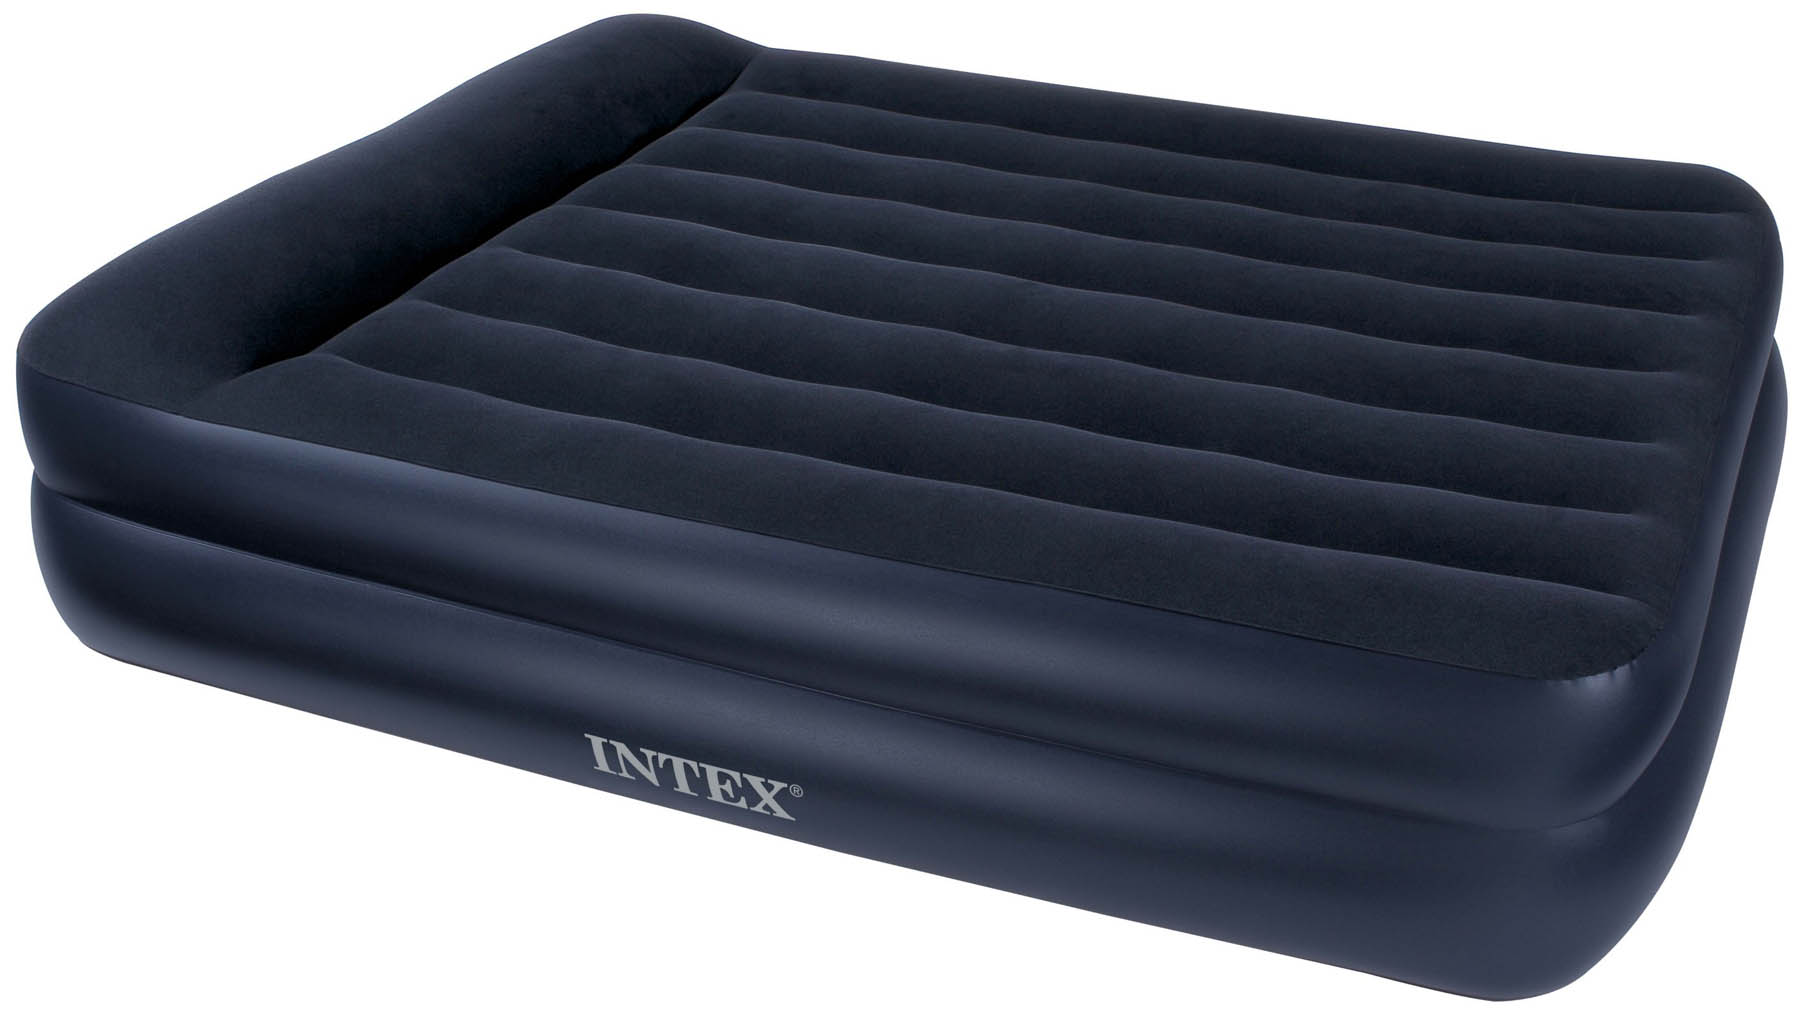 Надувной диван пвх. Надувная кровать Intex 64124. Надувная кровать Bestway Queen 67699 203х152х36. Надувной матрас Intex 152x203x42. Intex Deluxe Pillow rest raised Bed.